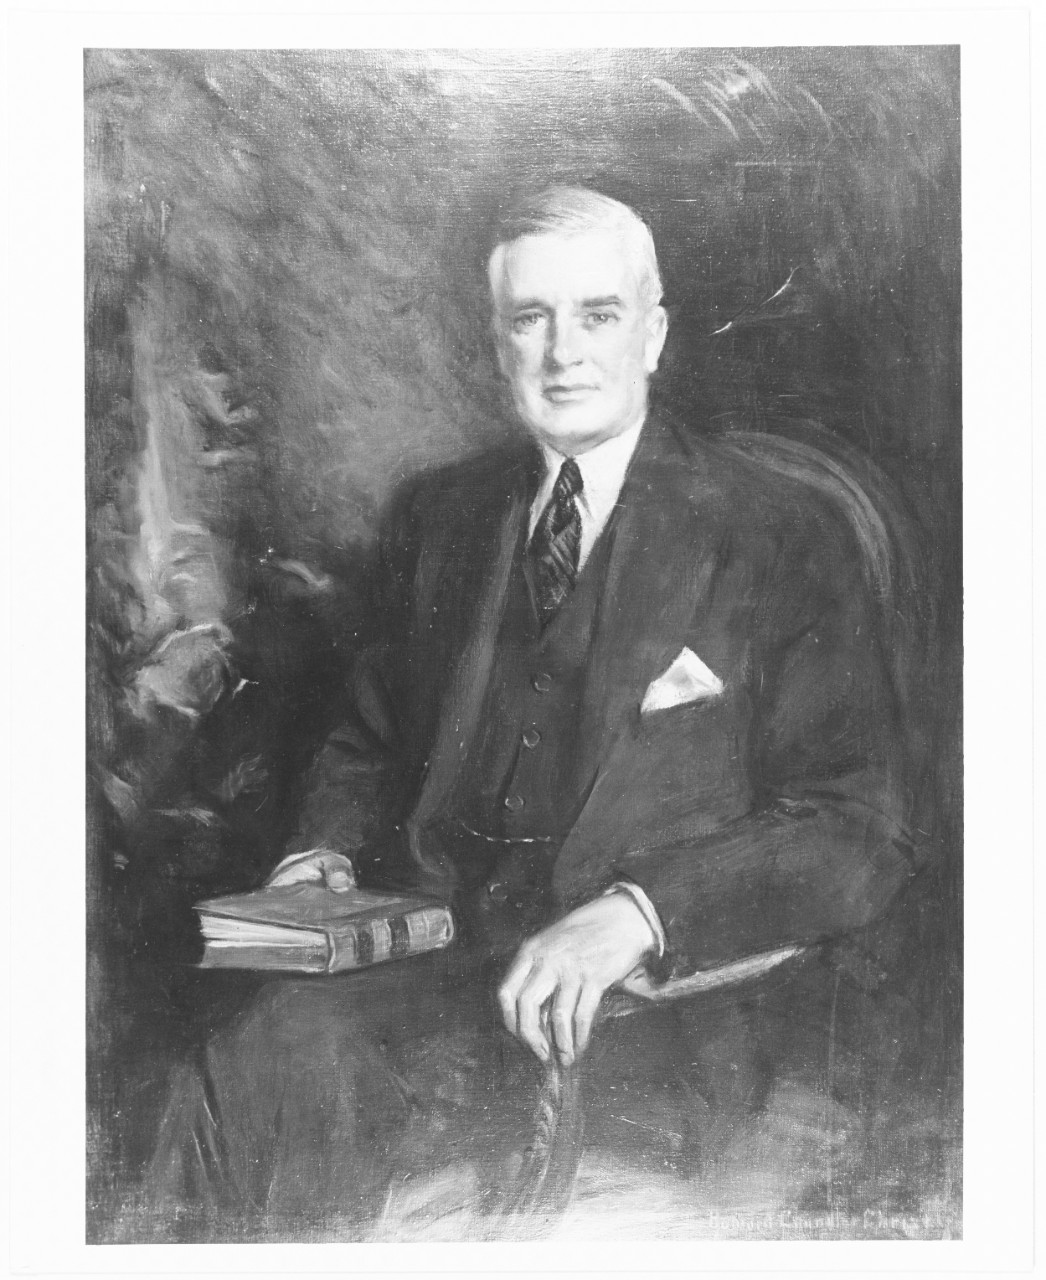 Portrait of Charles Edison